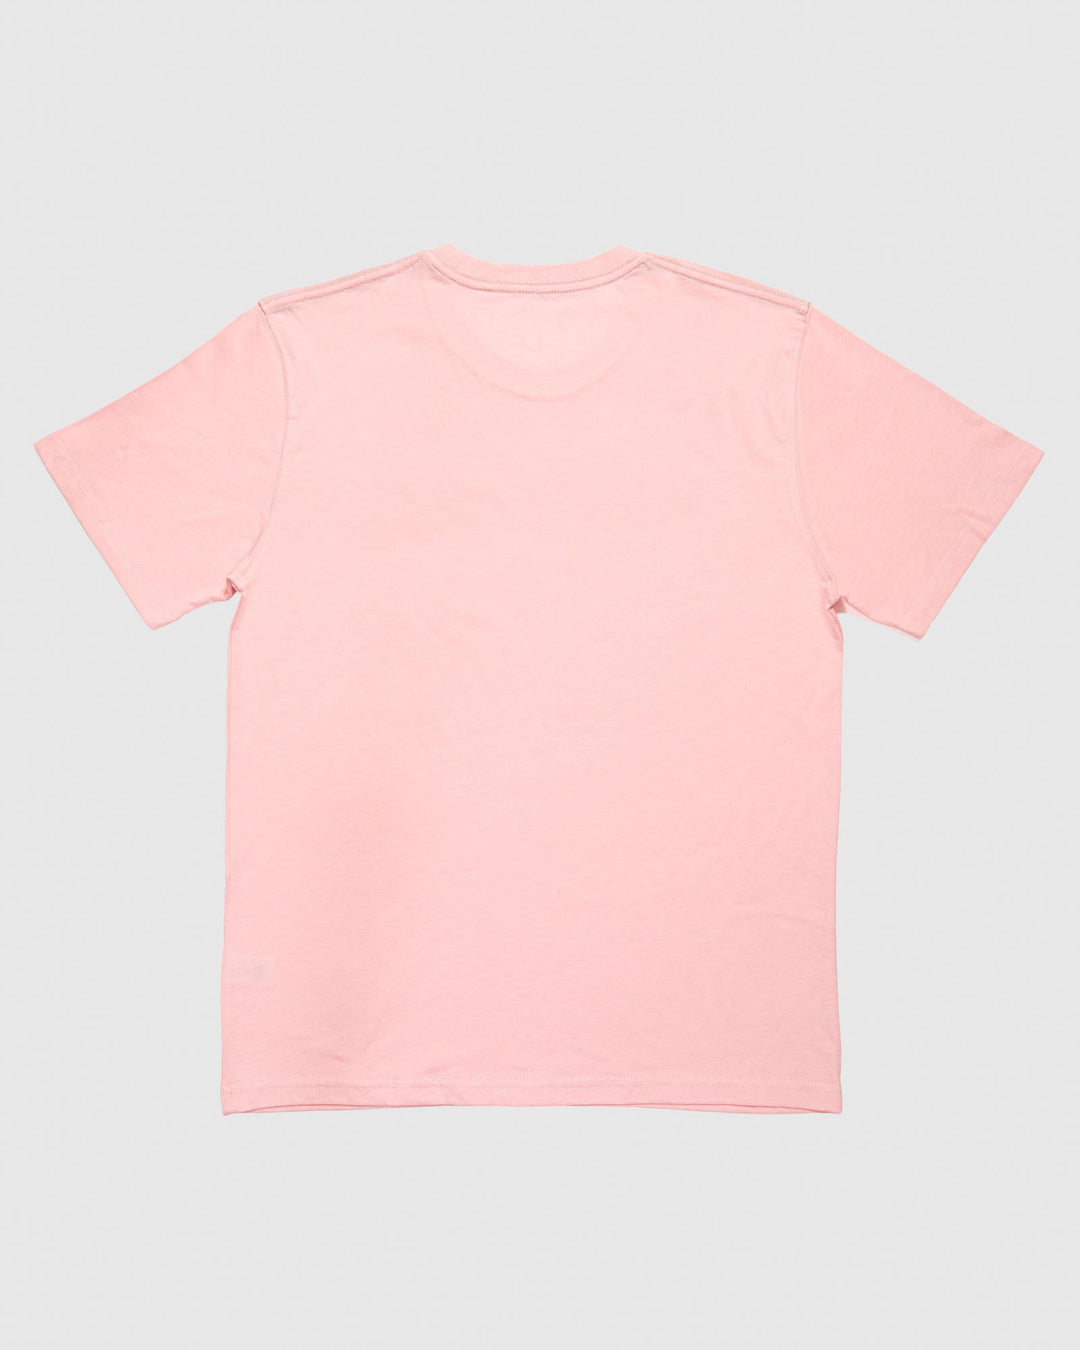 Back of pink shirt